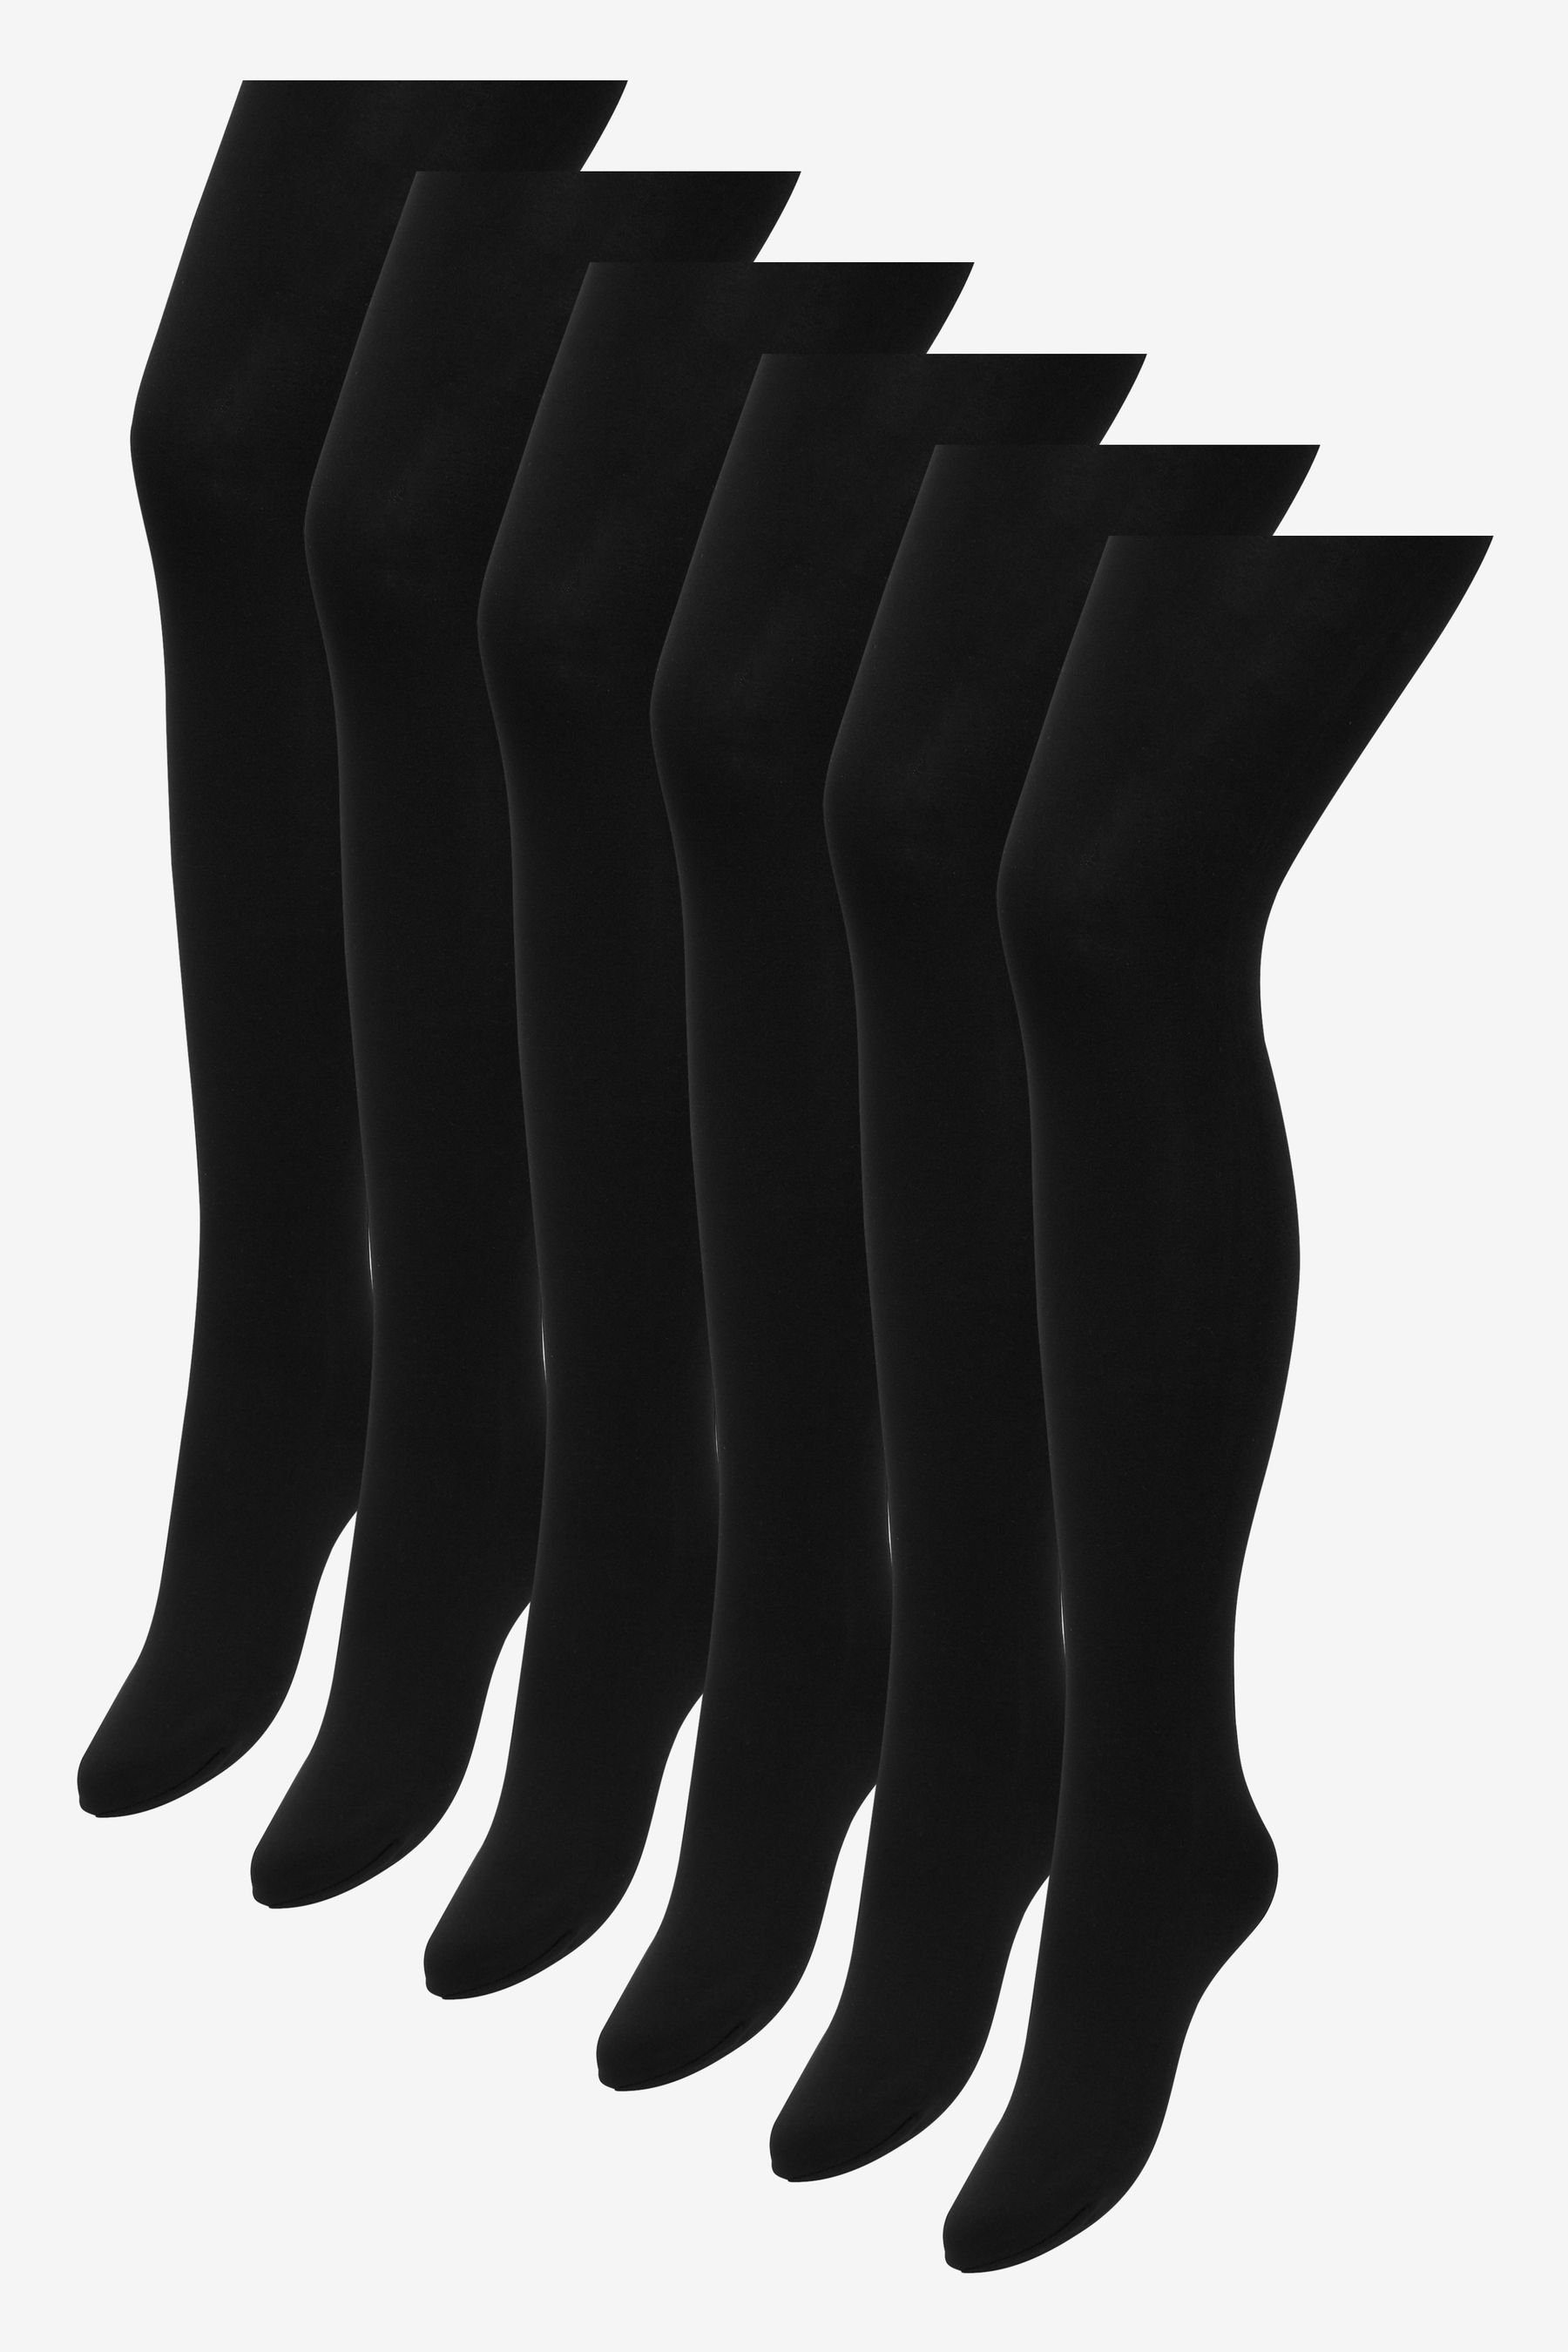 Next Strumpfhose Blickdichte 100 Denier Basic-Strumpfhose, 5er-Pack (3 St) Black